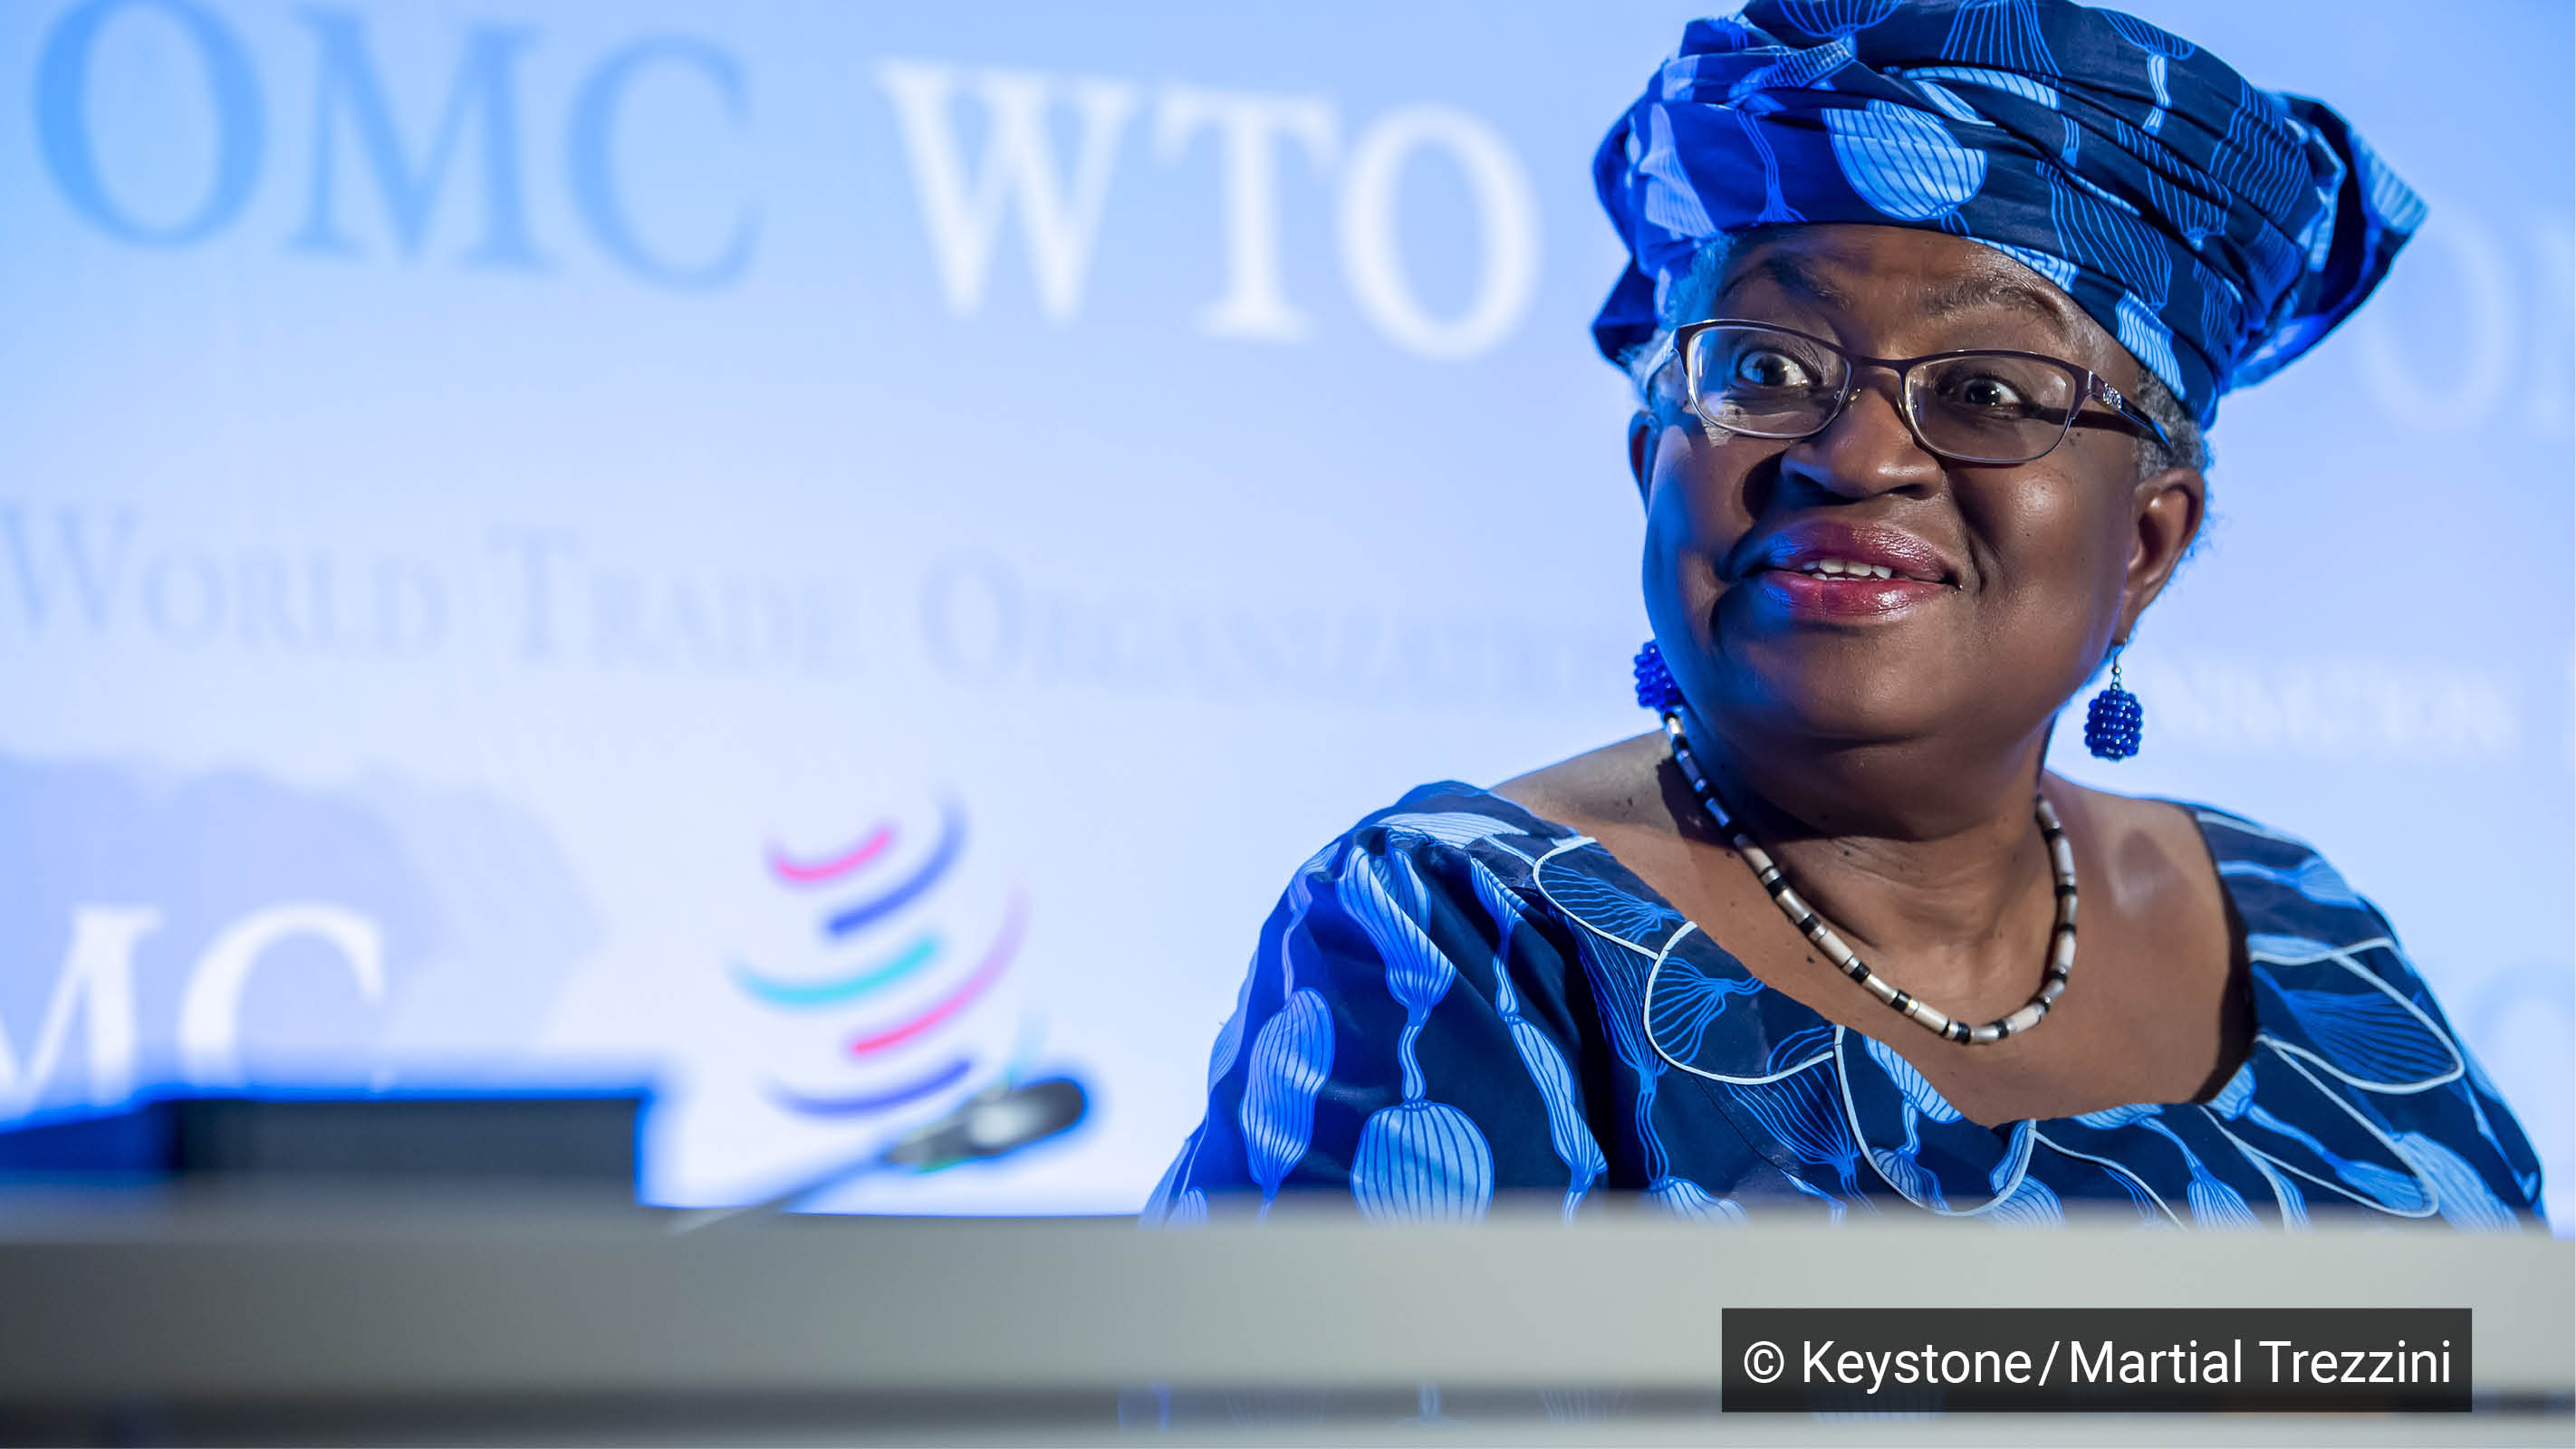 Close-up of WTO President Ngozi Okonjo-Iweala at a conference